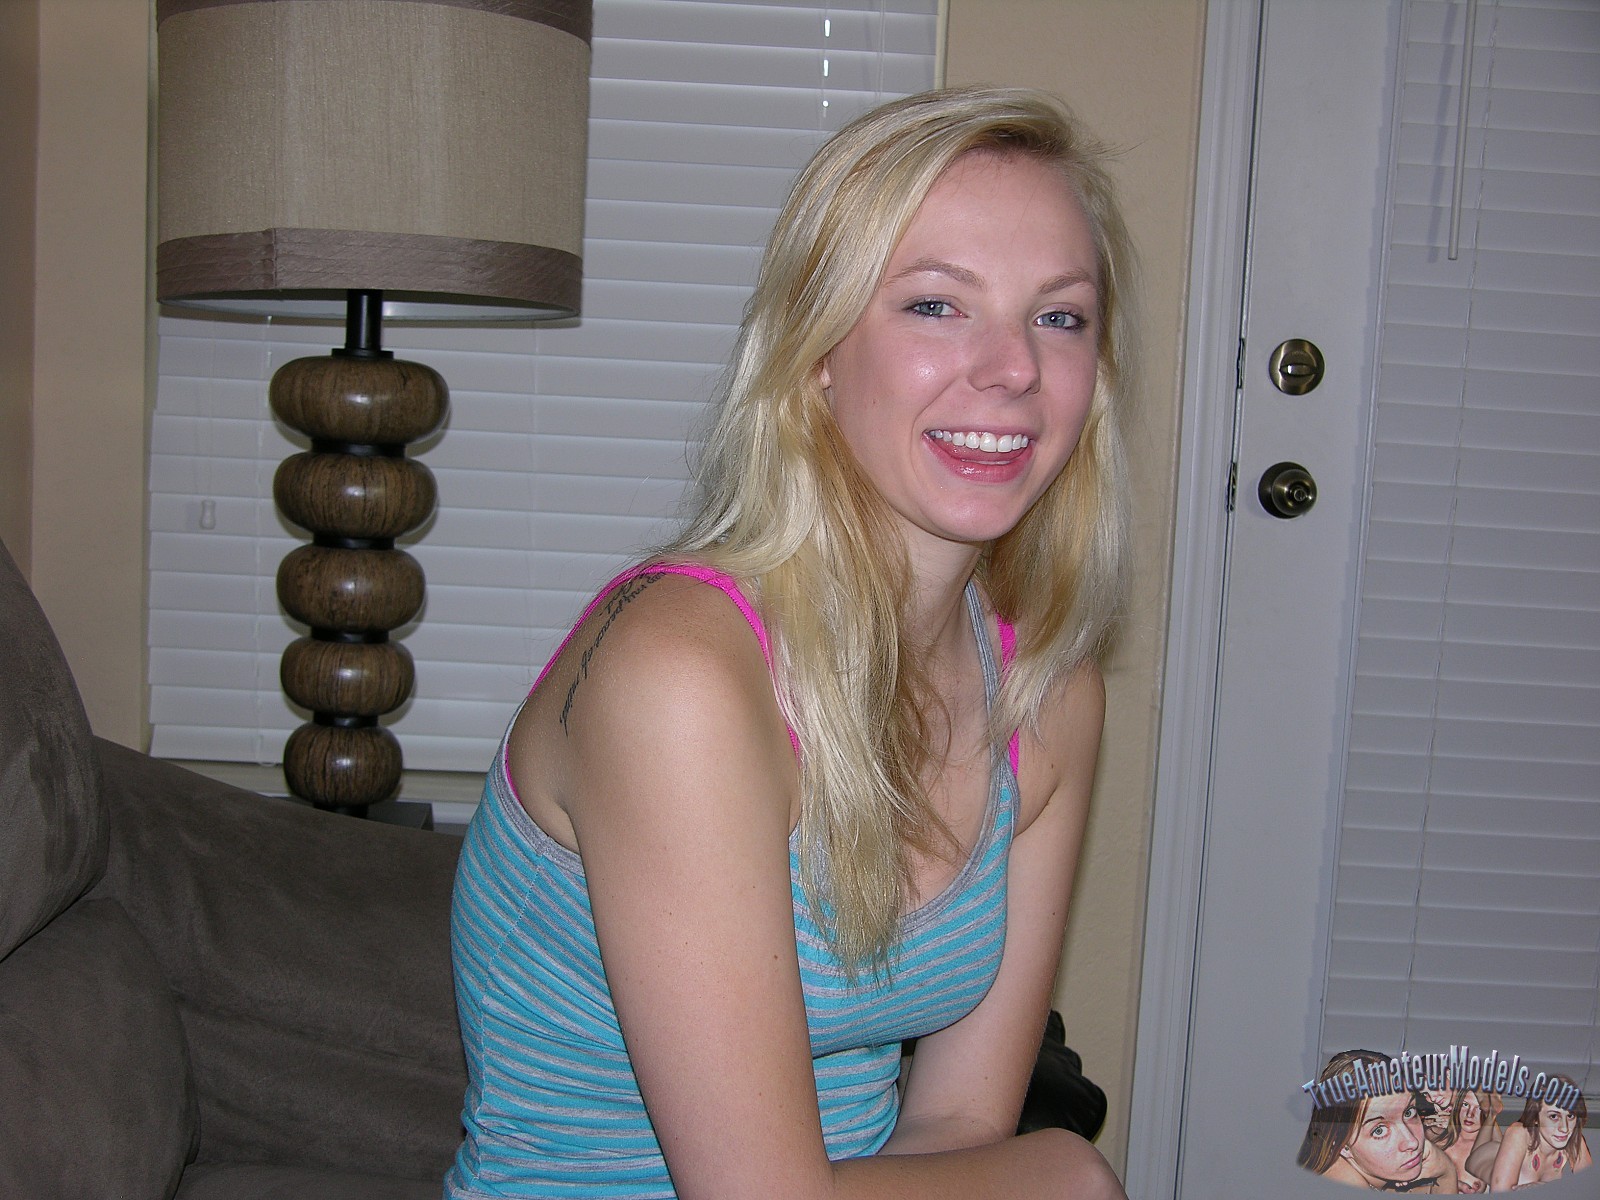 xpics - girlfriend sex Hot amateur blonde teen spreads butthole photo image